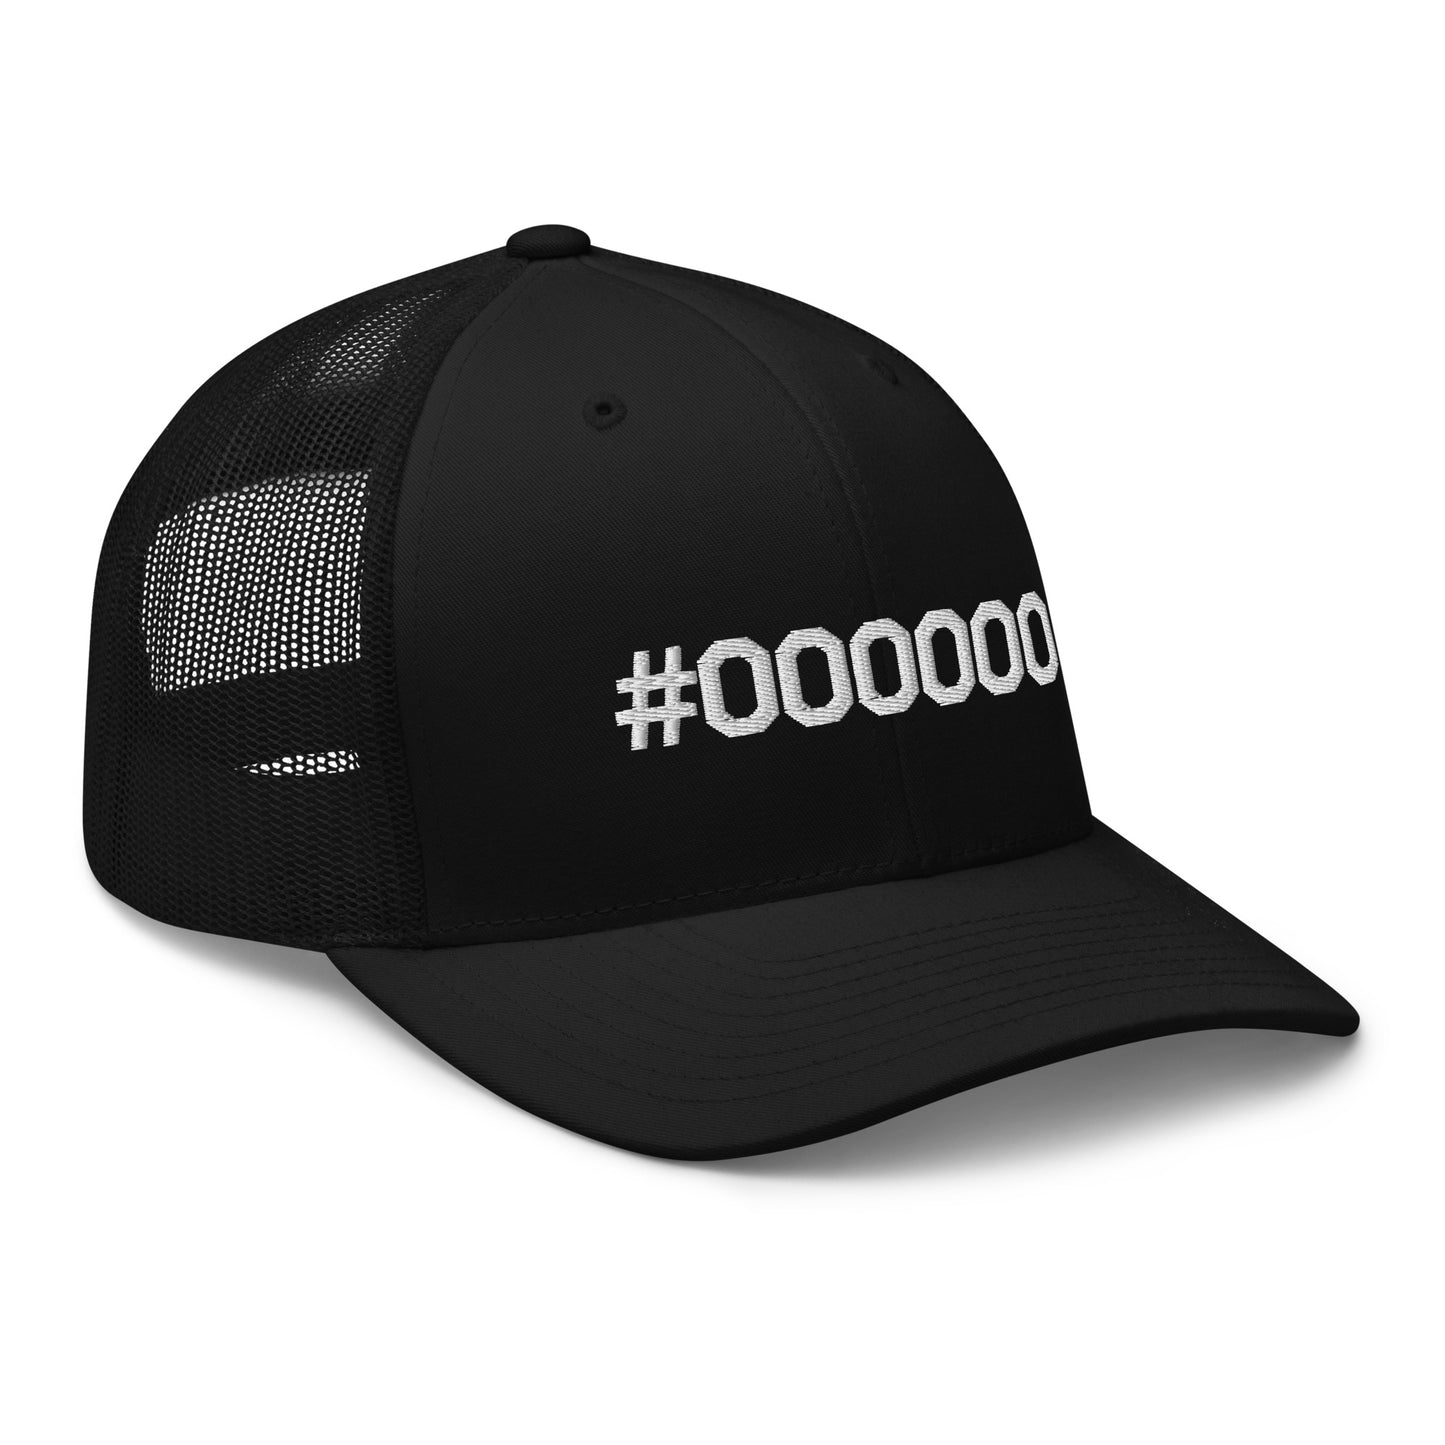 #000000 Embroidered Trucker Cap